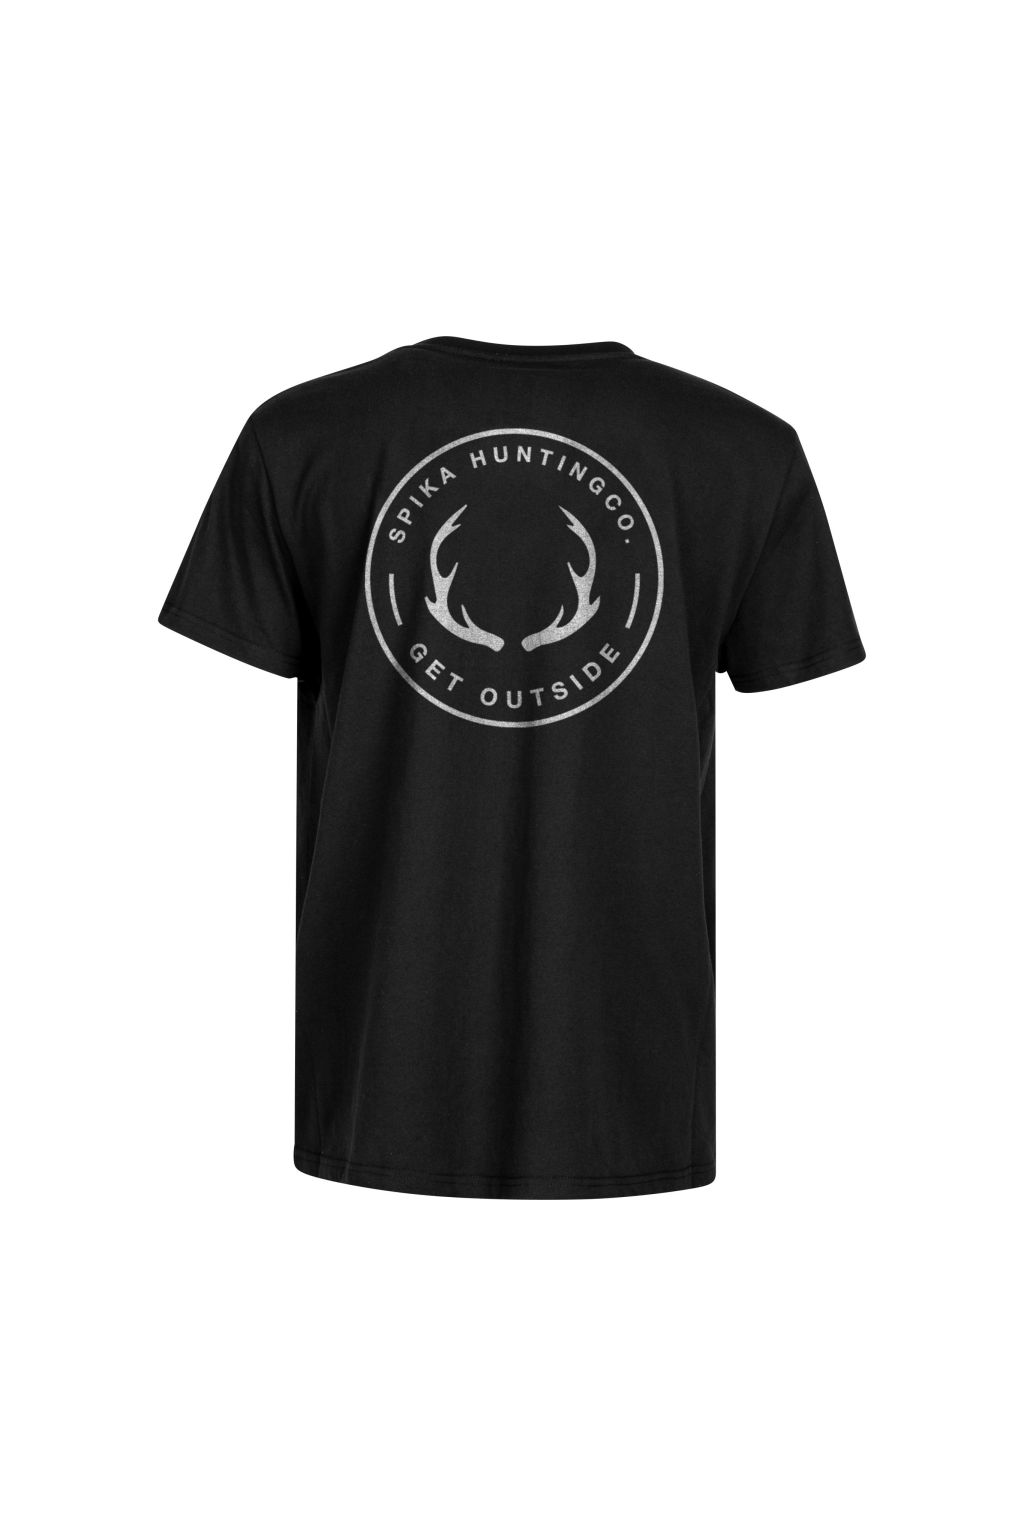 Spika GO Revolution Mens T-Shirt - Black -  - Mansfield Hunting & Fishing - Products to prepare for Corona Virus